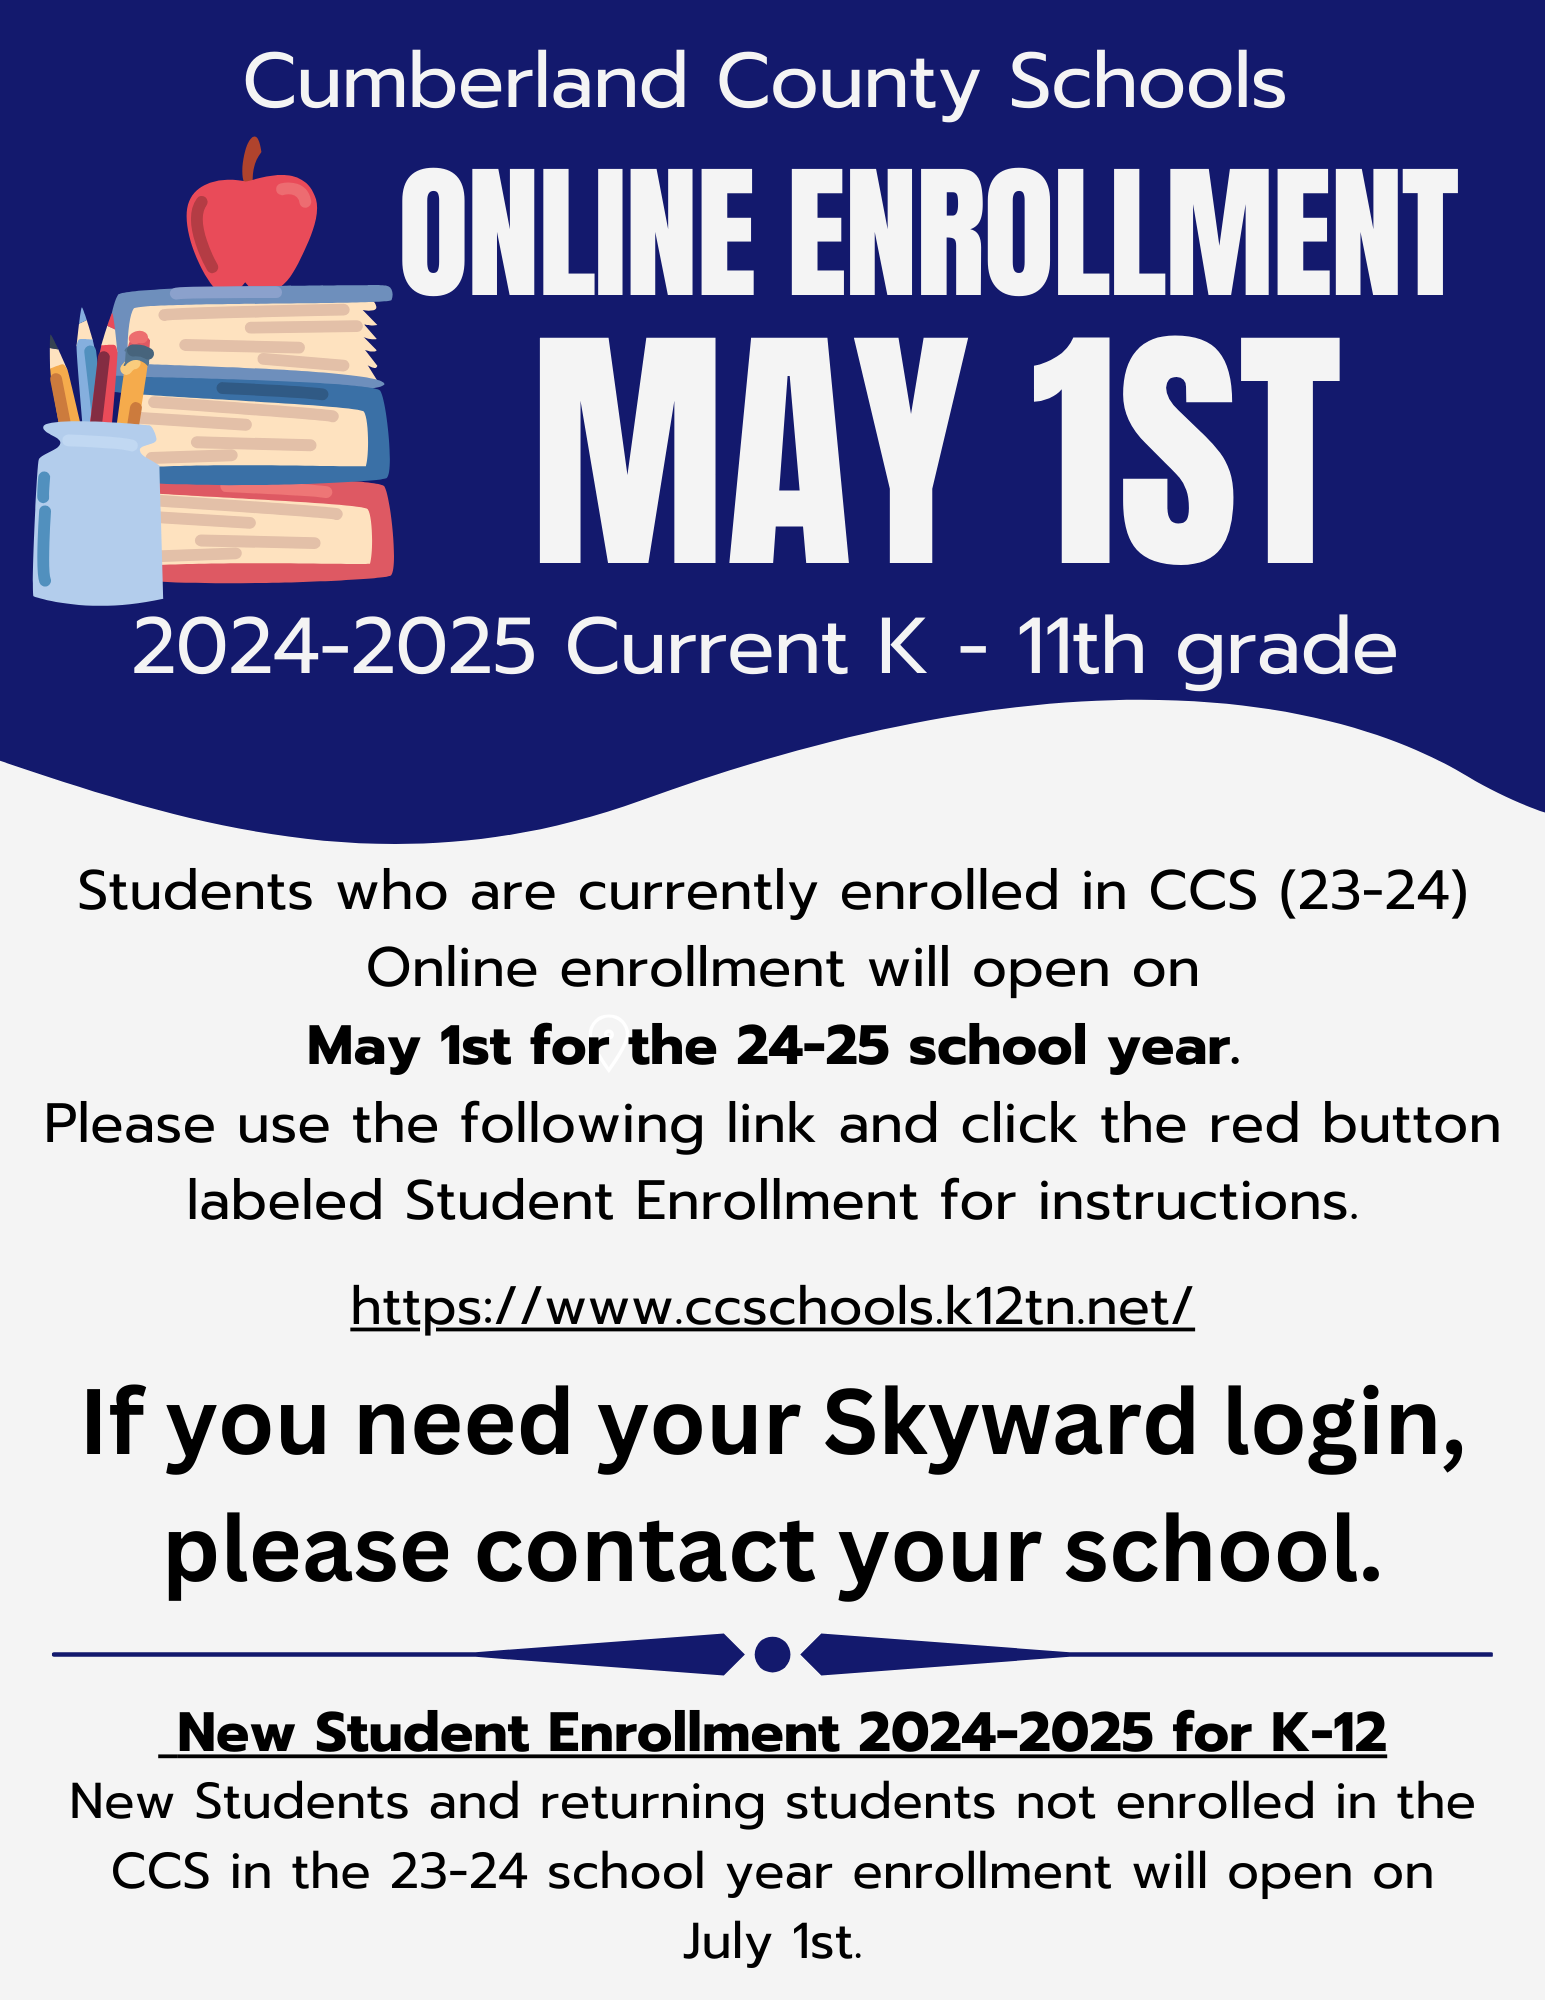 Cumberland County Schools Online Enrollment May 1st 2024-2025 Current K - 11th grade